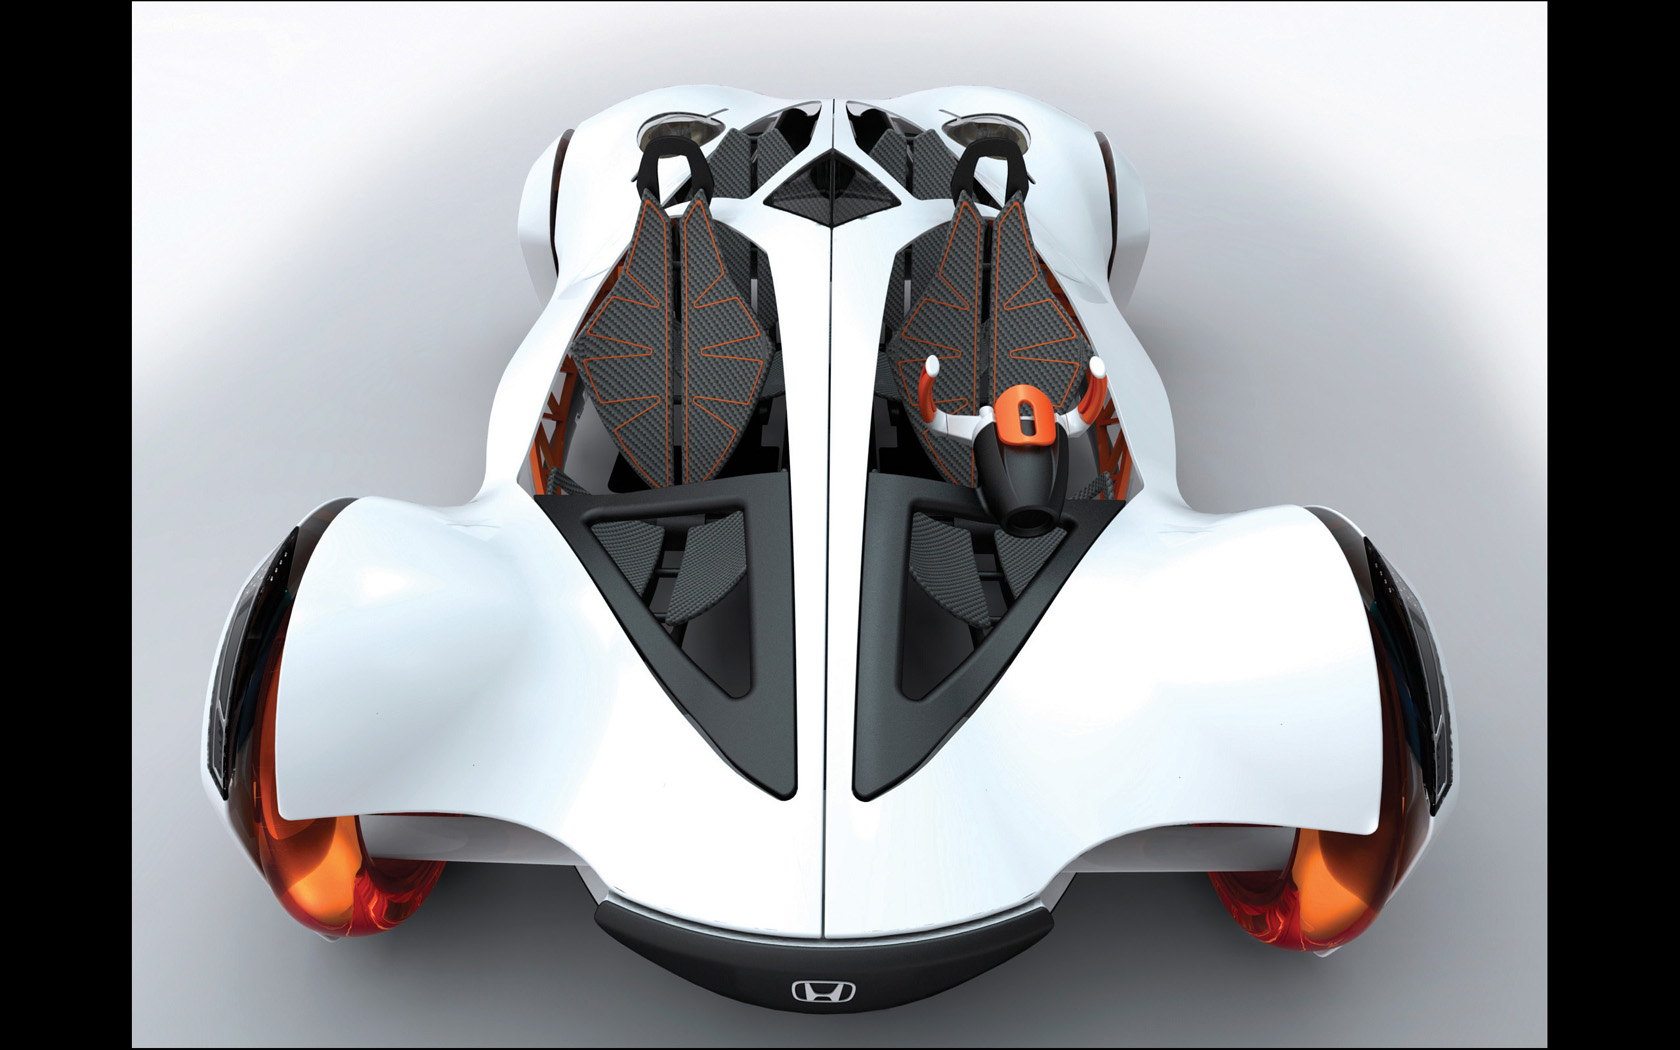 2010 Honda Air Concept Design Challenge